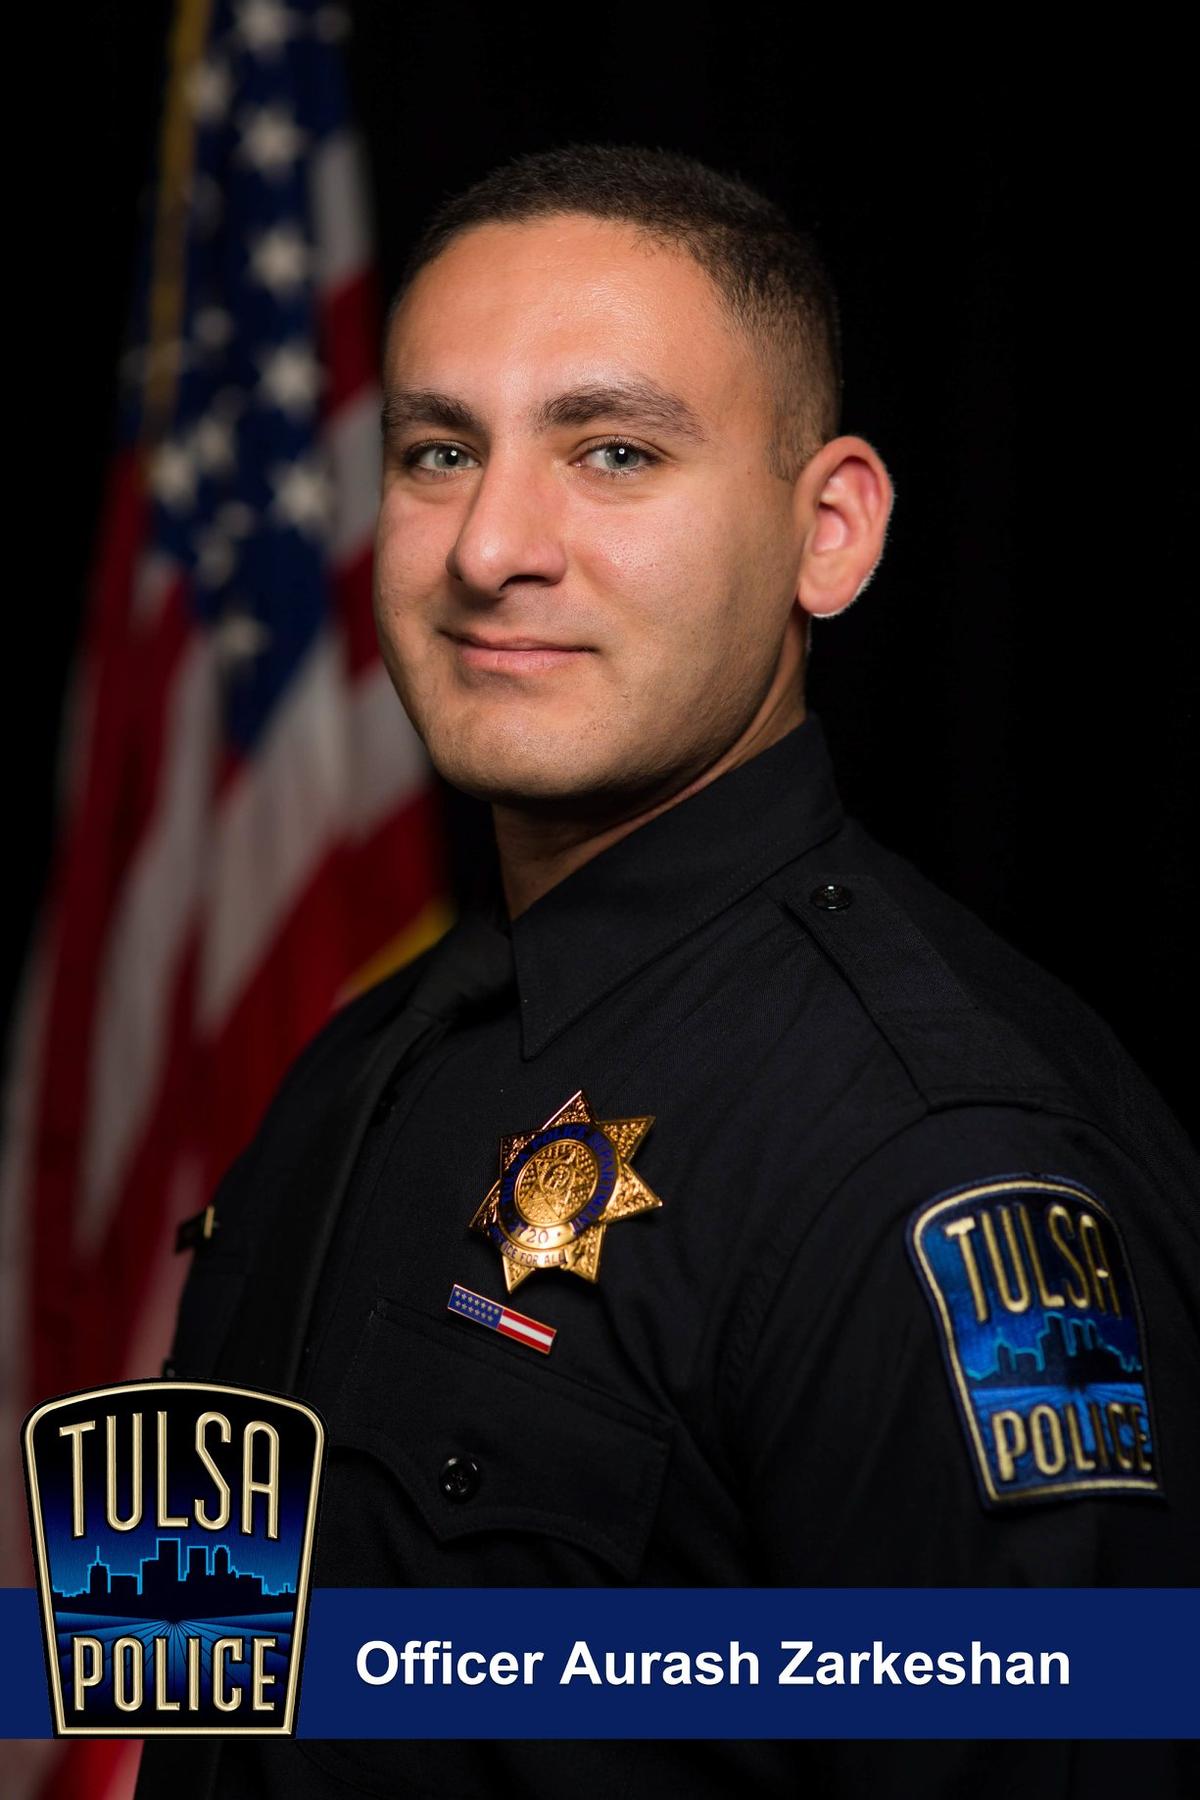 Officer Aurash Zarkeshan of Tulsa Police Department. (Courtesy of <a href="https://www.tulsapolice.org/default.aspx">Tulsa Police Department</a>)